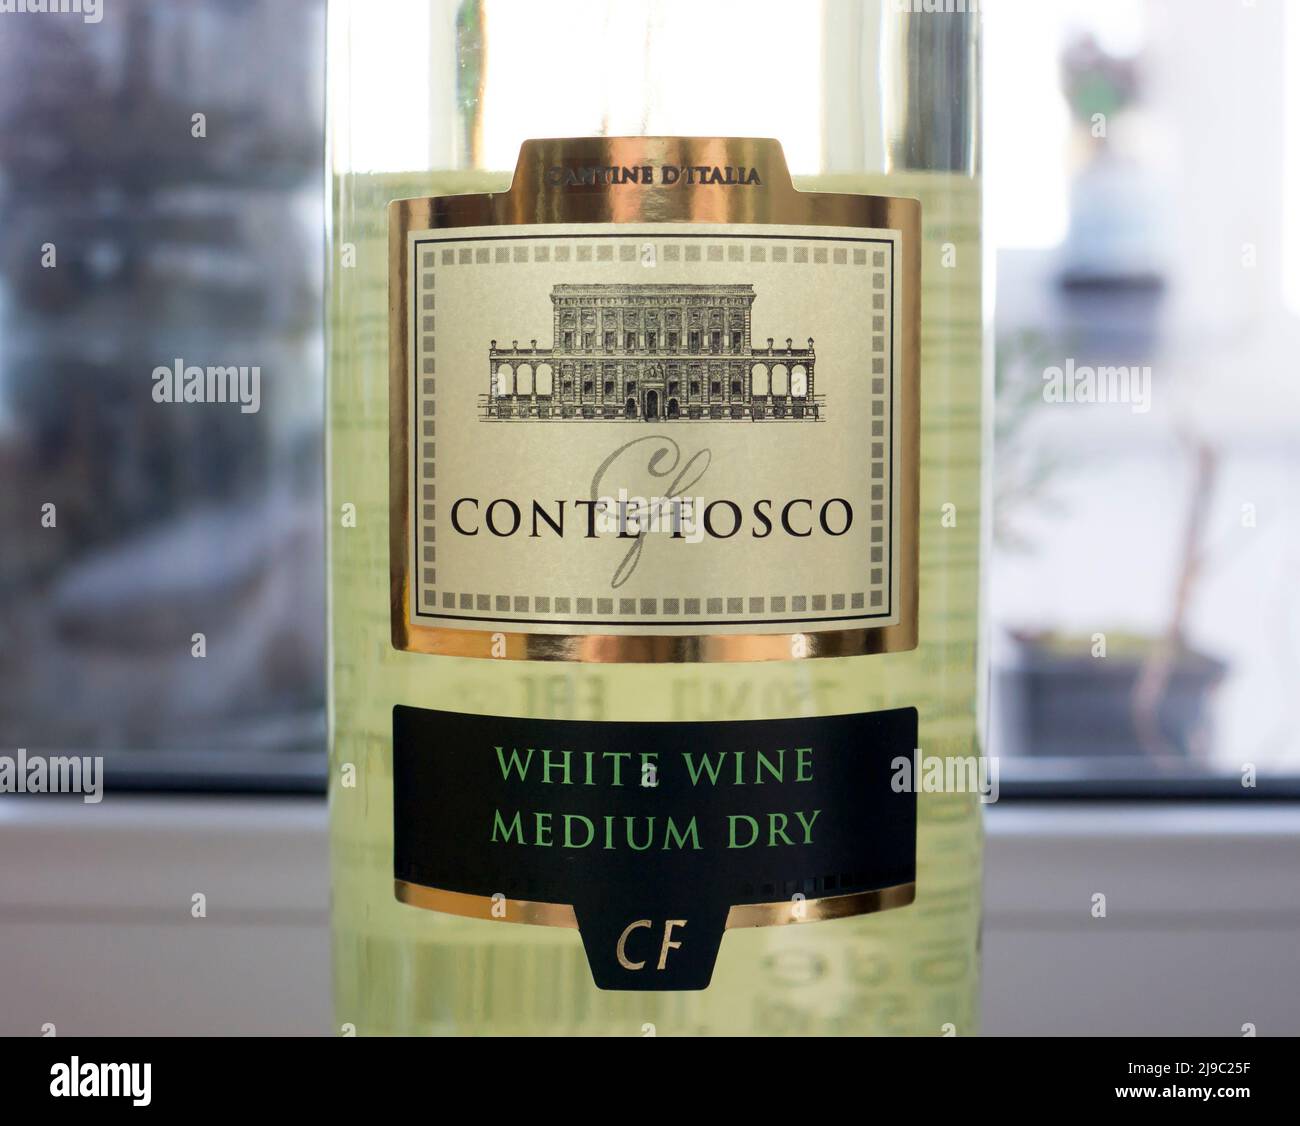 Medio Vino blanco seco Conte Fosco. 2021. Foto de stock